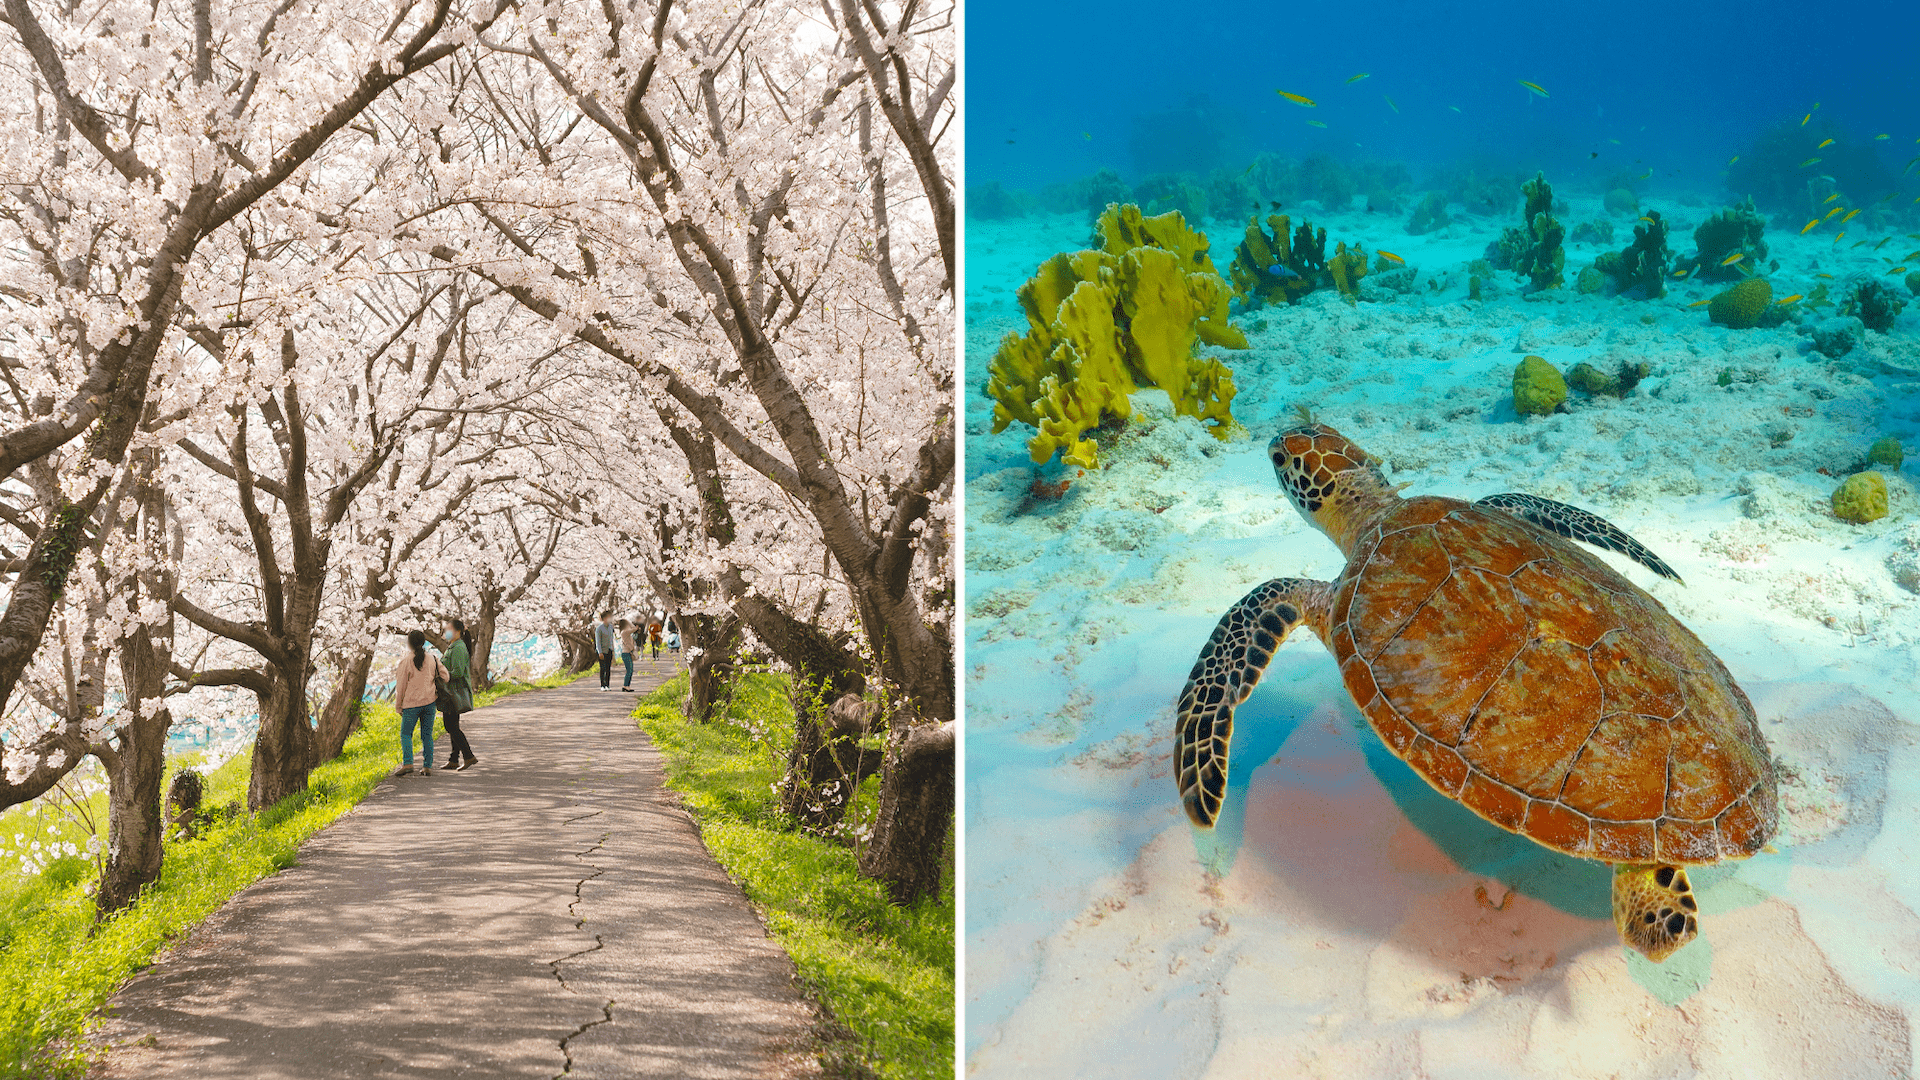 Someiyoshino cherry blossoms in full bloom; Sea turtle in Tobago. 